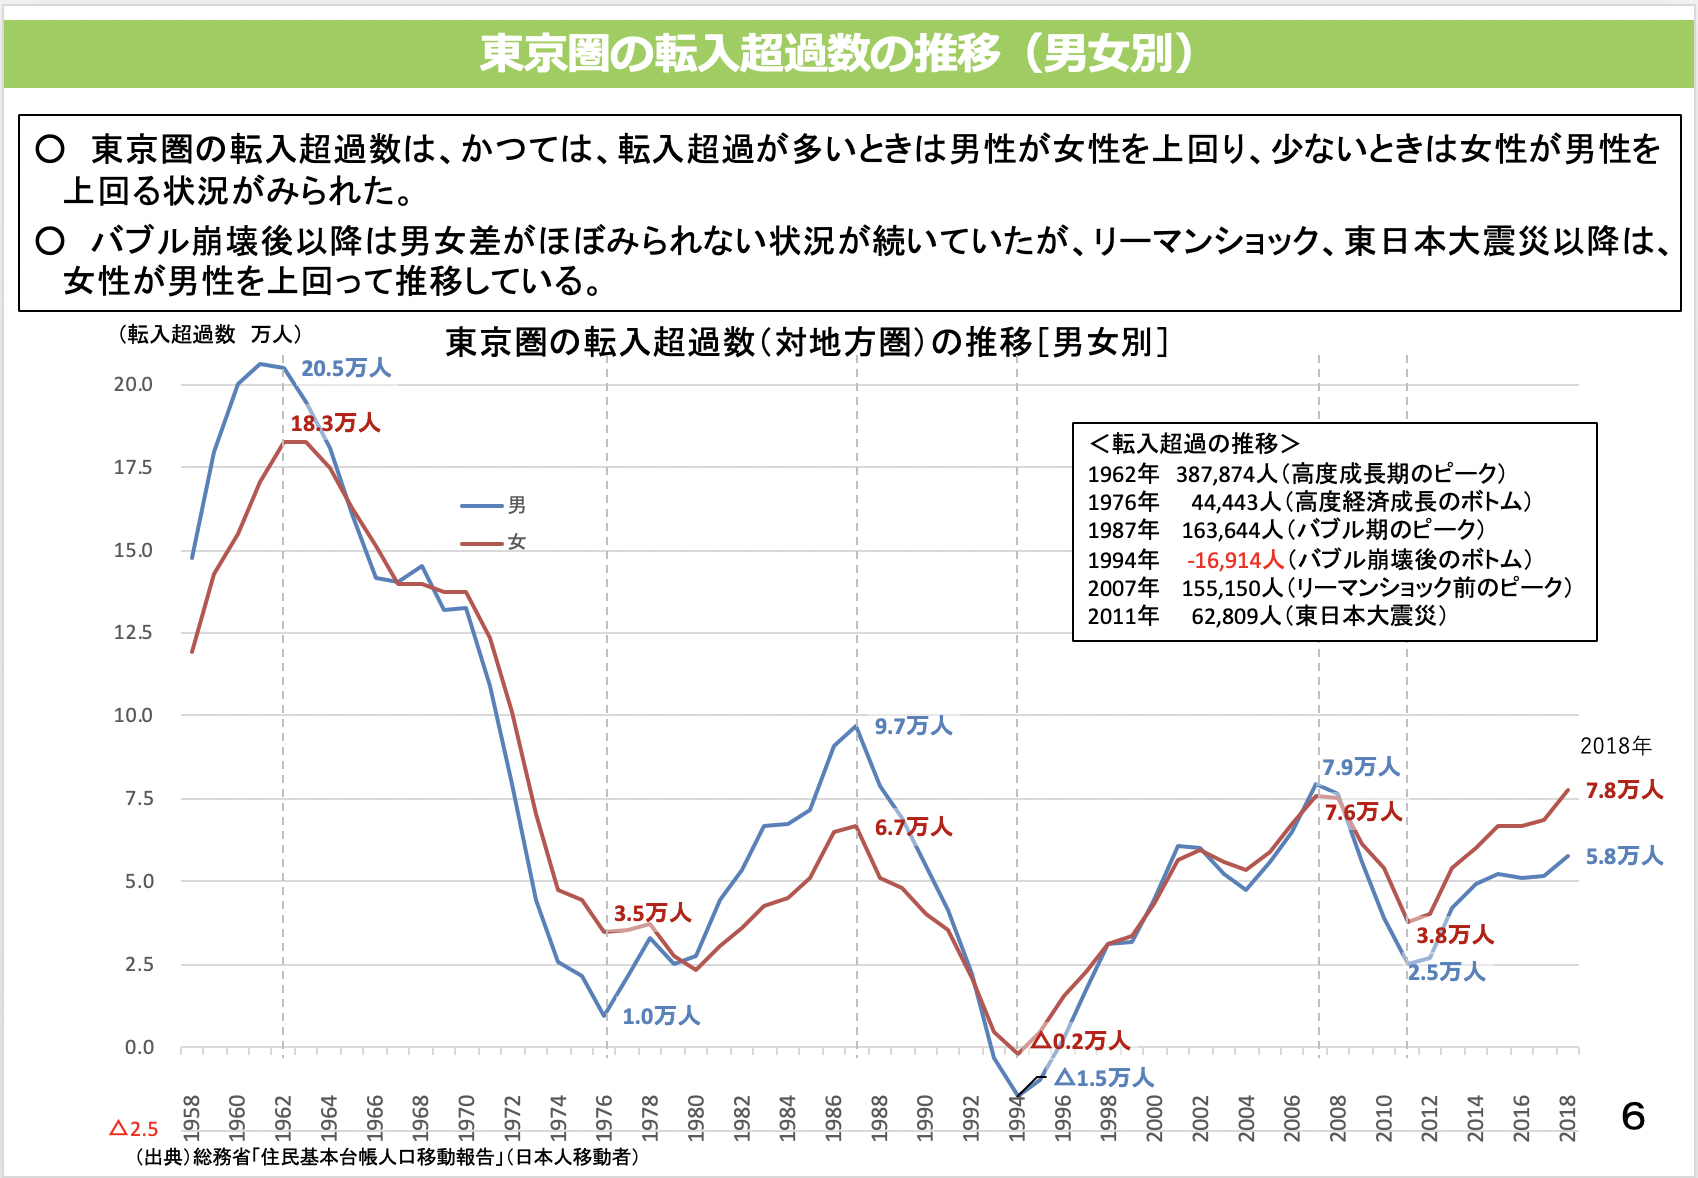 東京圏の転入超過数の推移（男女別）